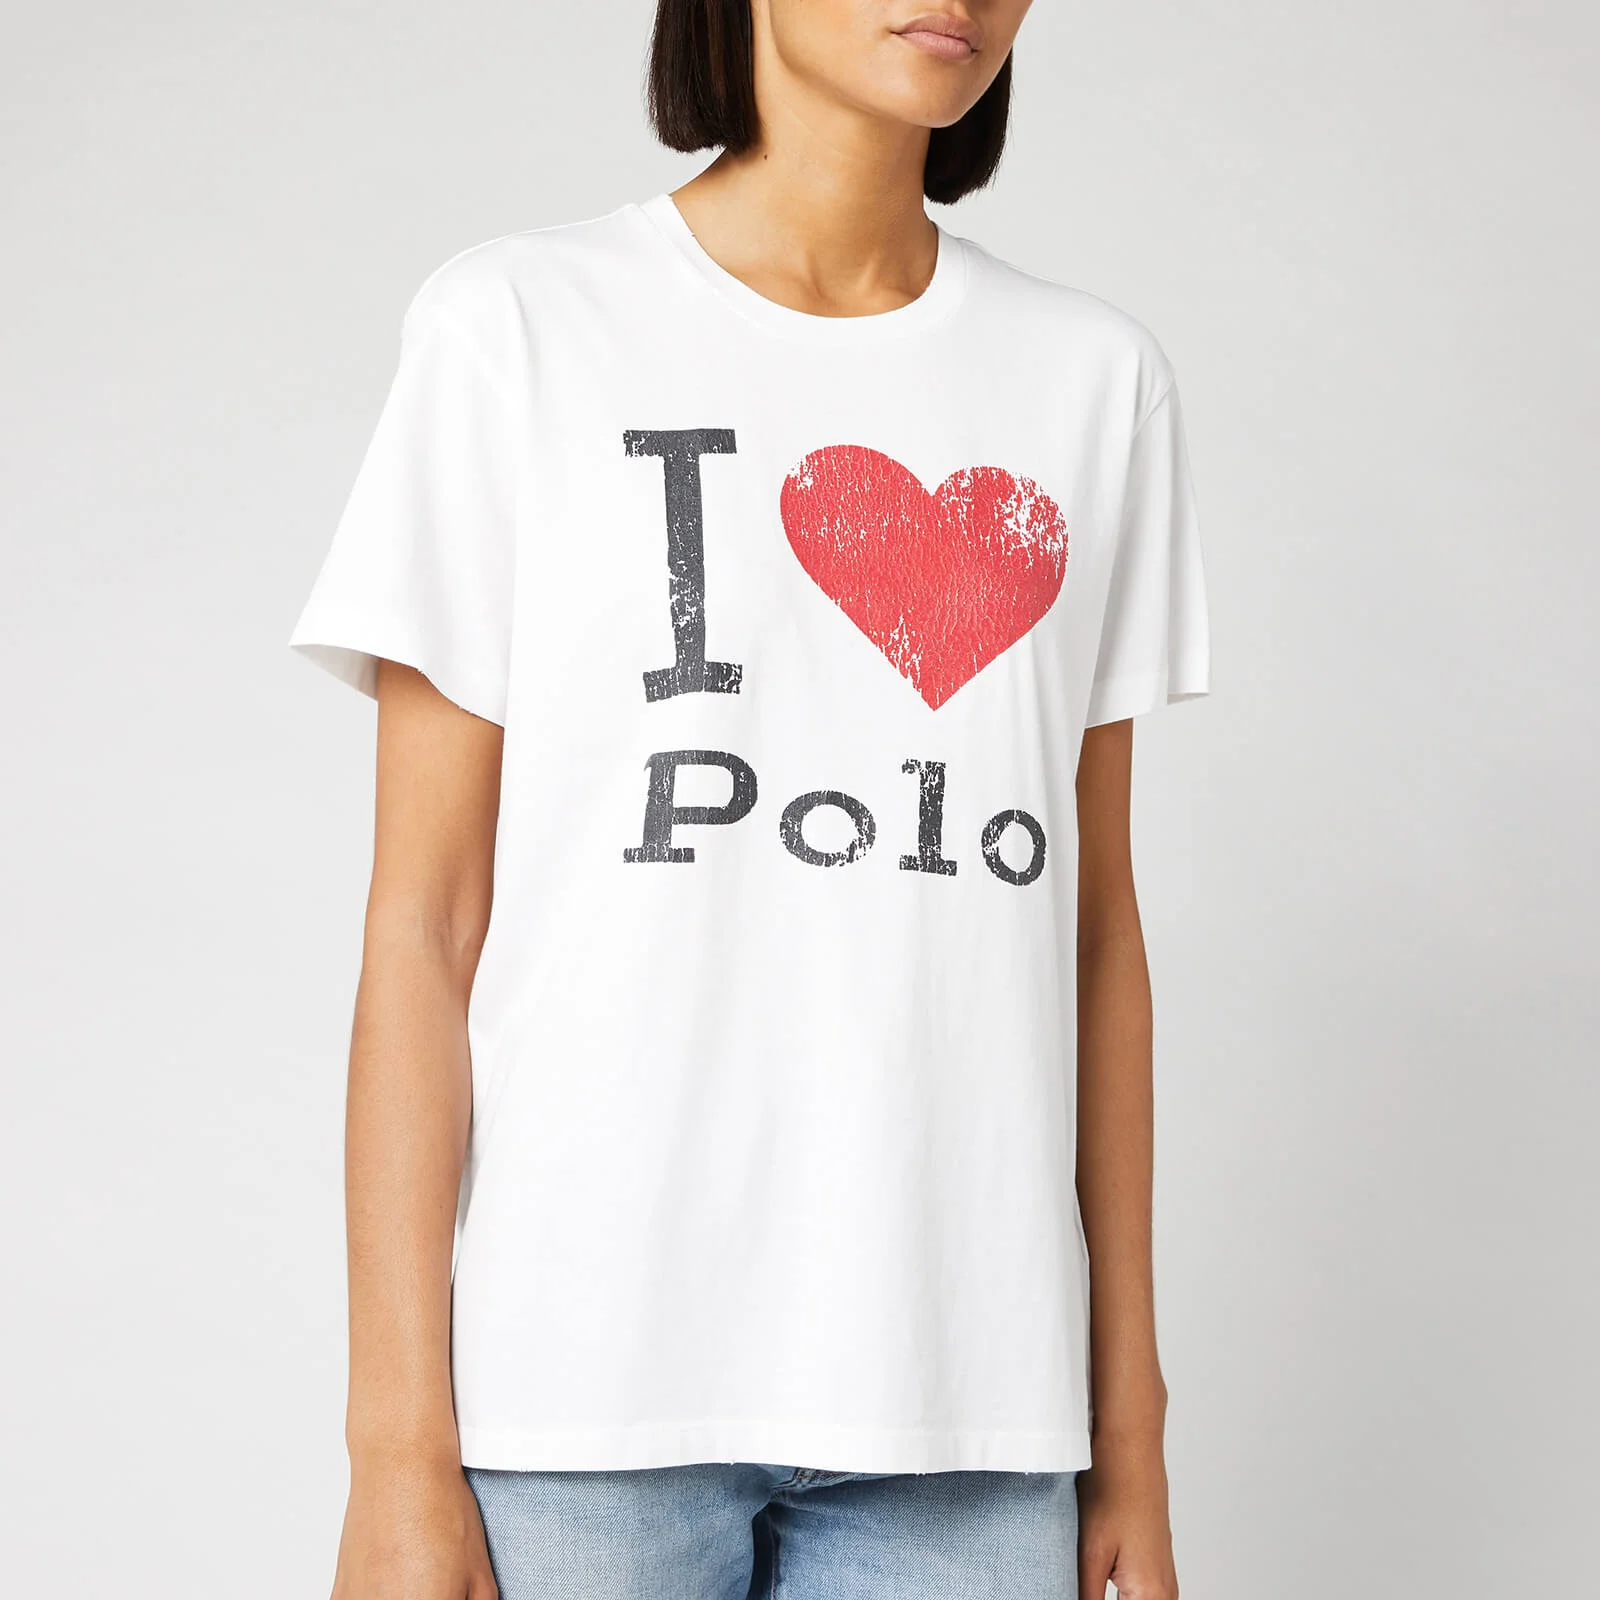 Polo Ralph Lauren Women's Big Heart Short Sleeve T-Shirt - White Image 1